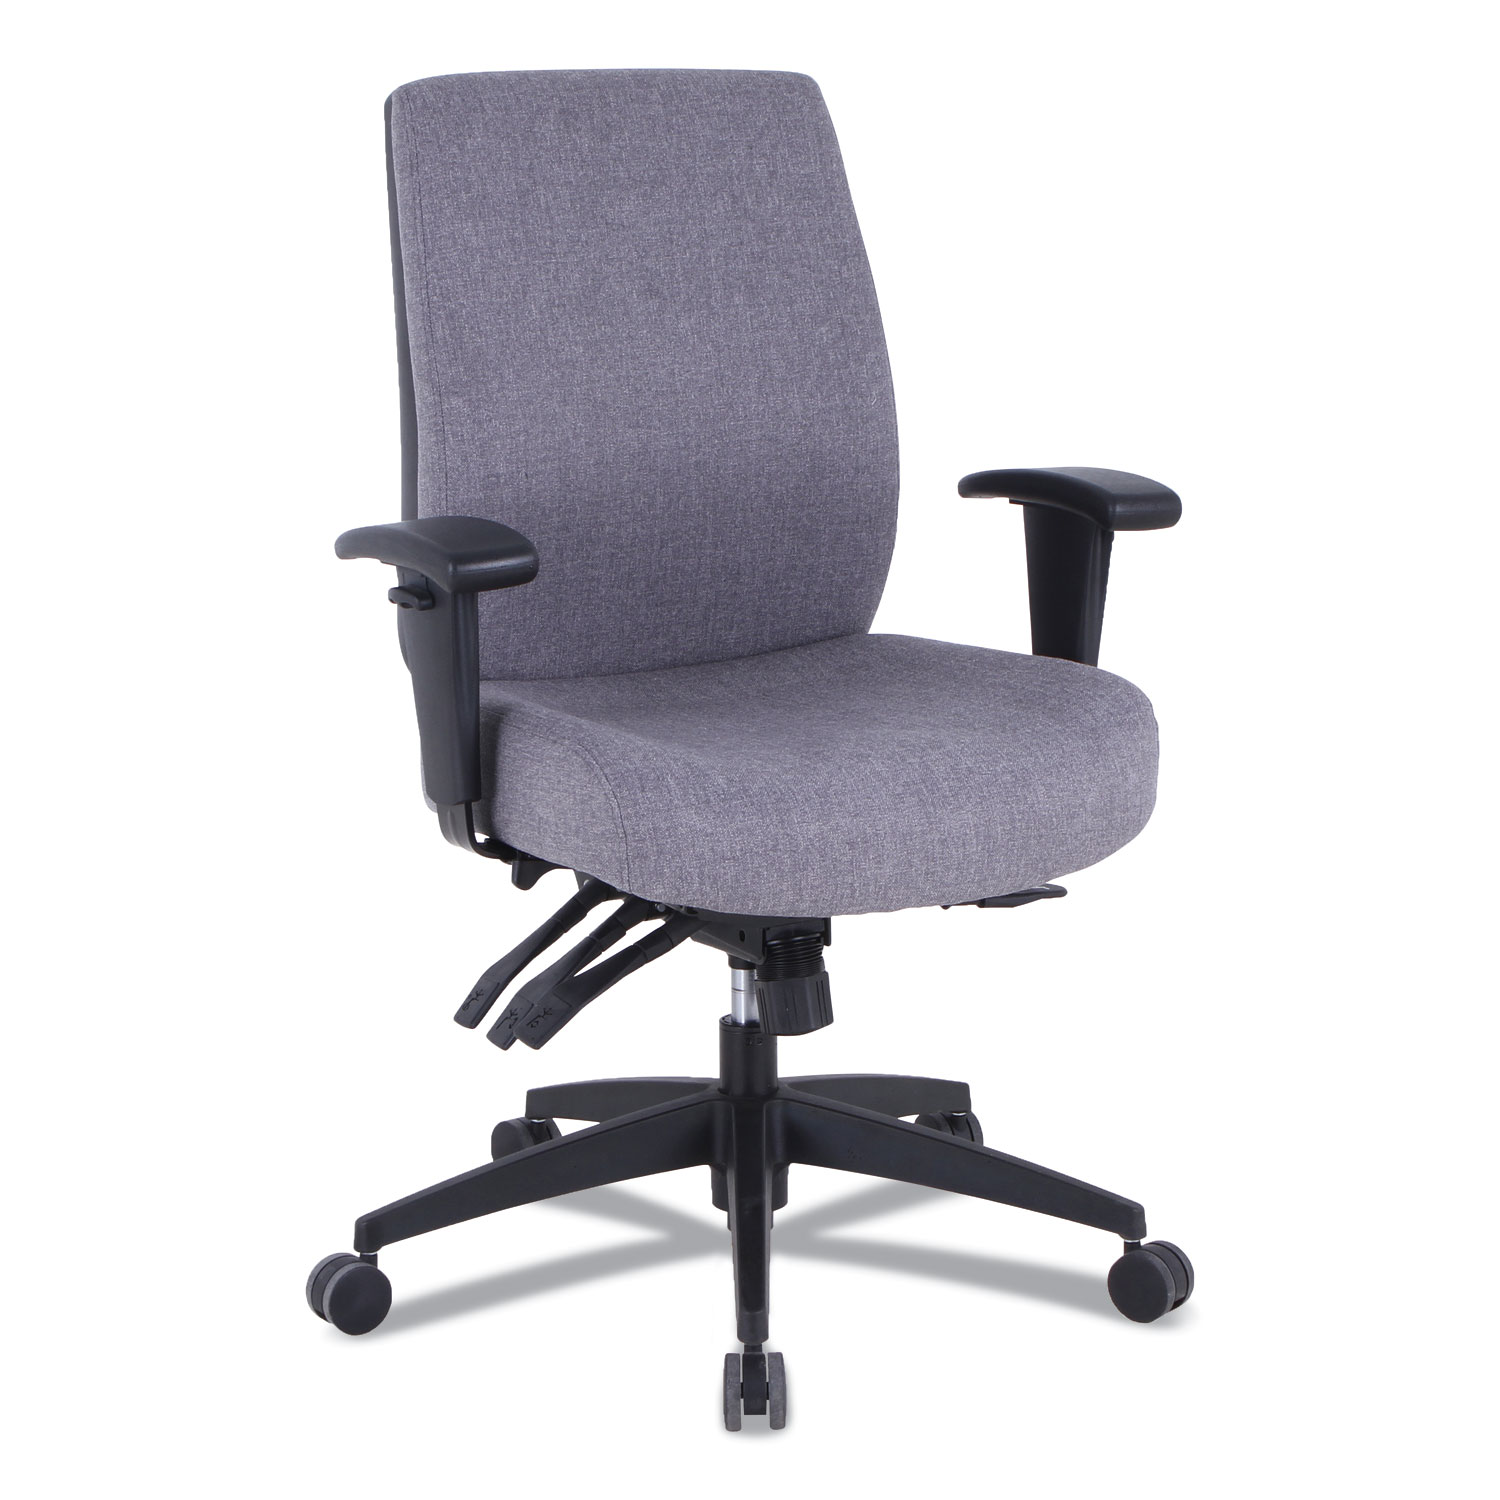  Alera HPT4241 Alera Wrigley Series 24/7 High Performance Mid-Back Multifunction Task Chair, Up to 275 lbs., Gray Seat/Back, Black Base (ALEHPT4241) 